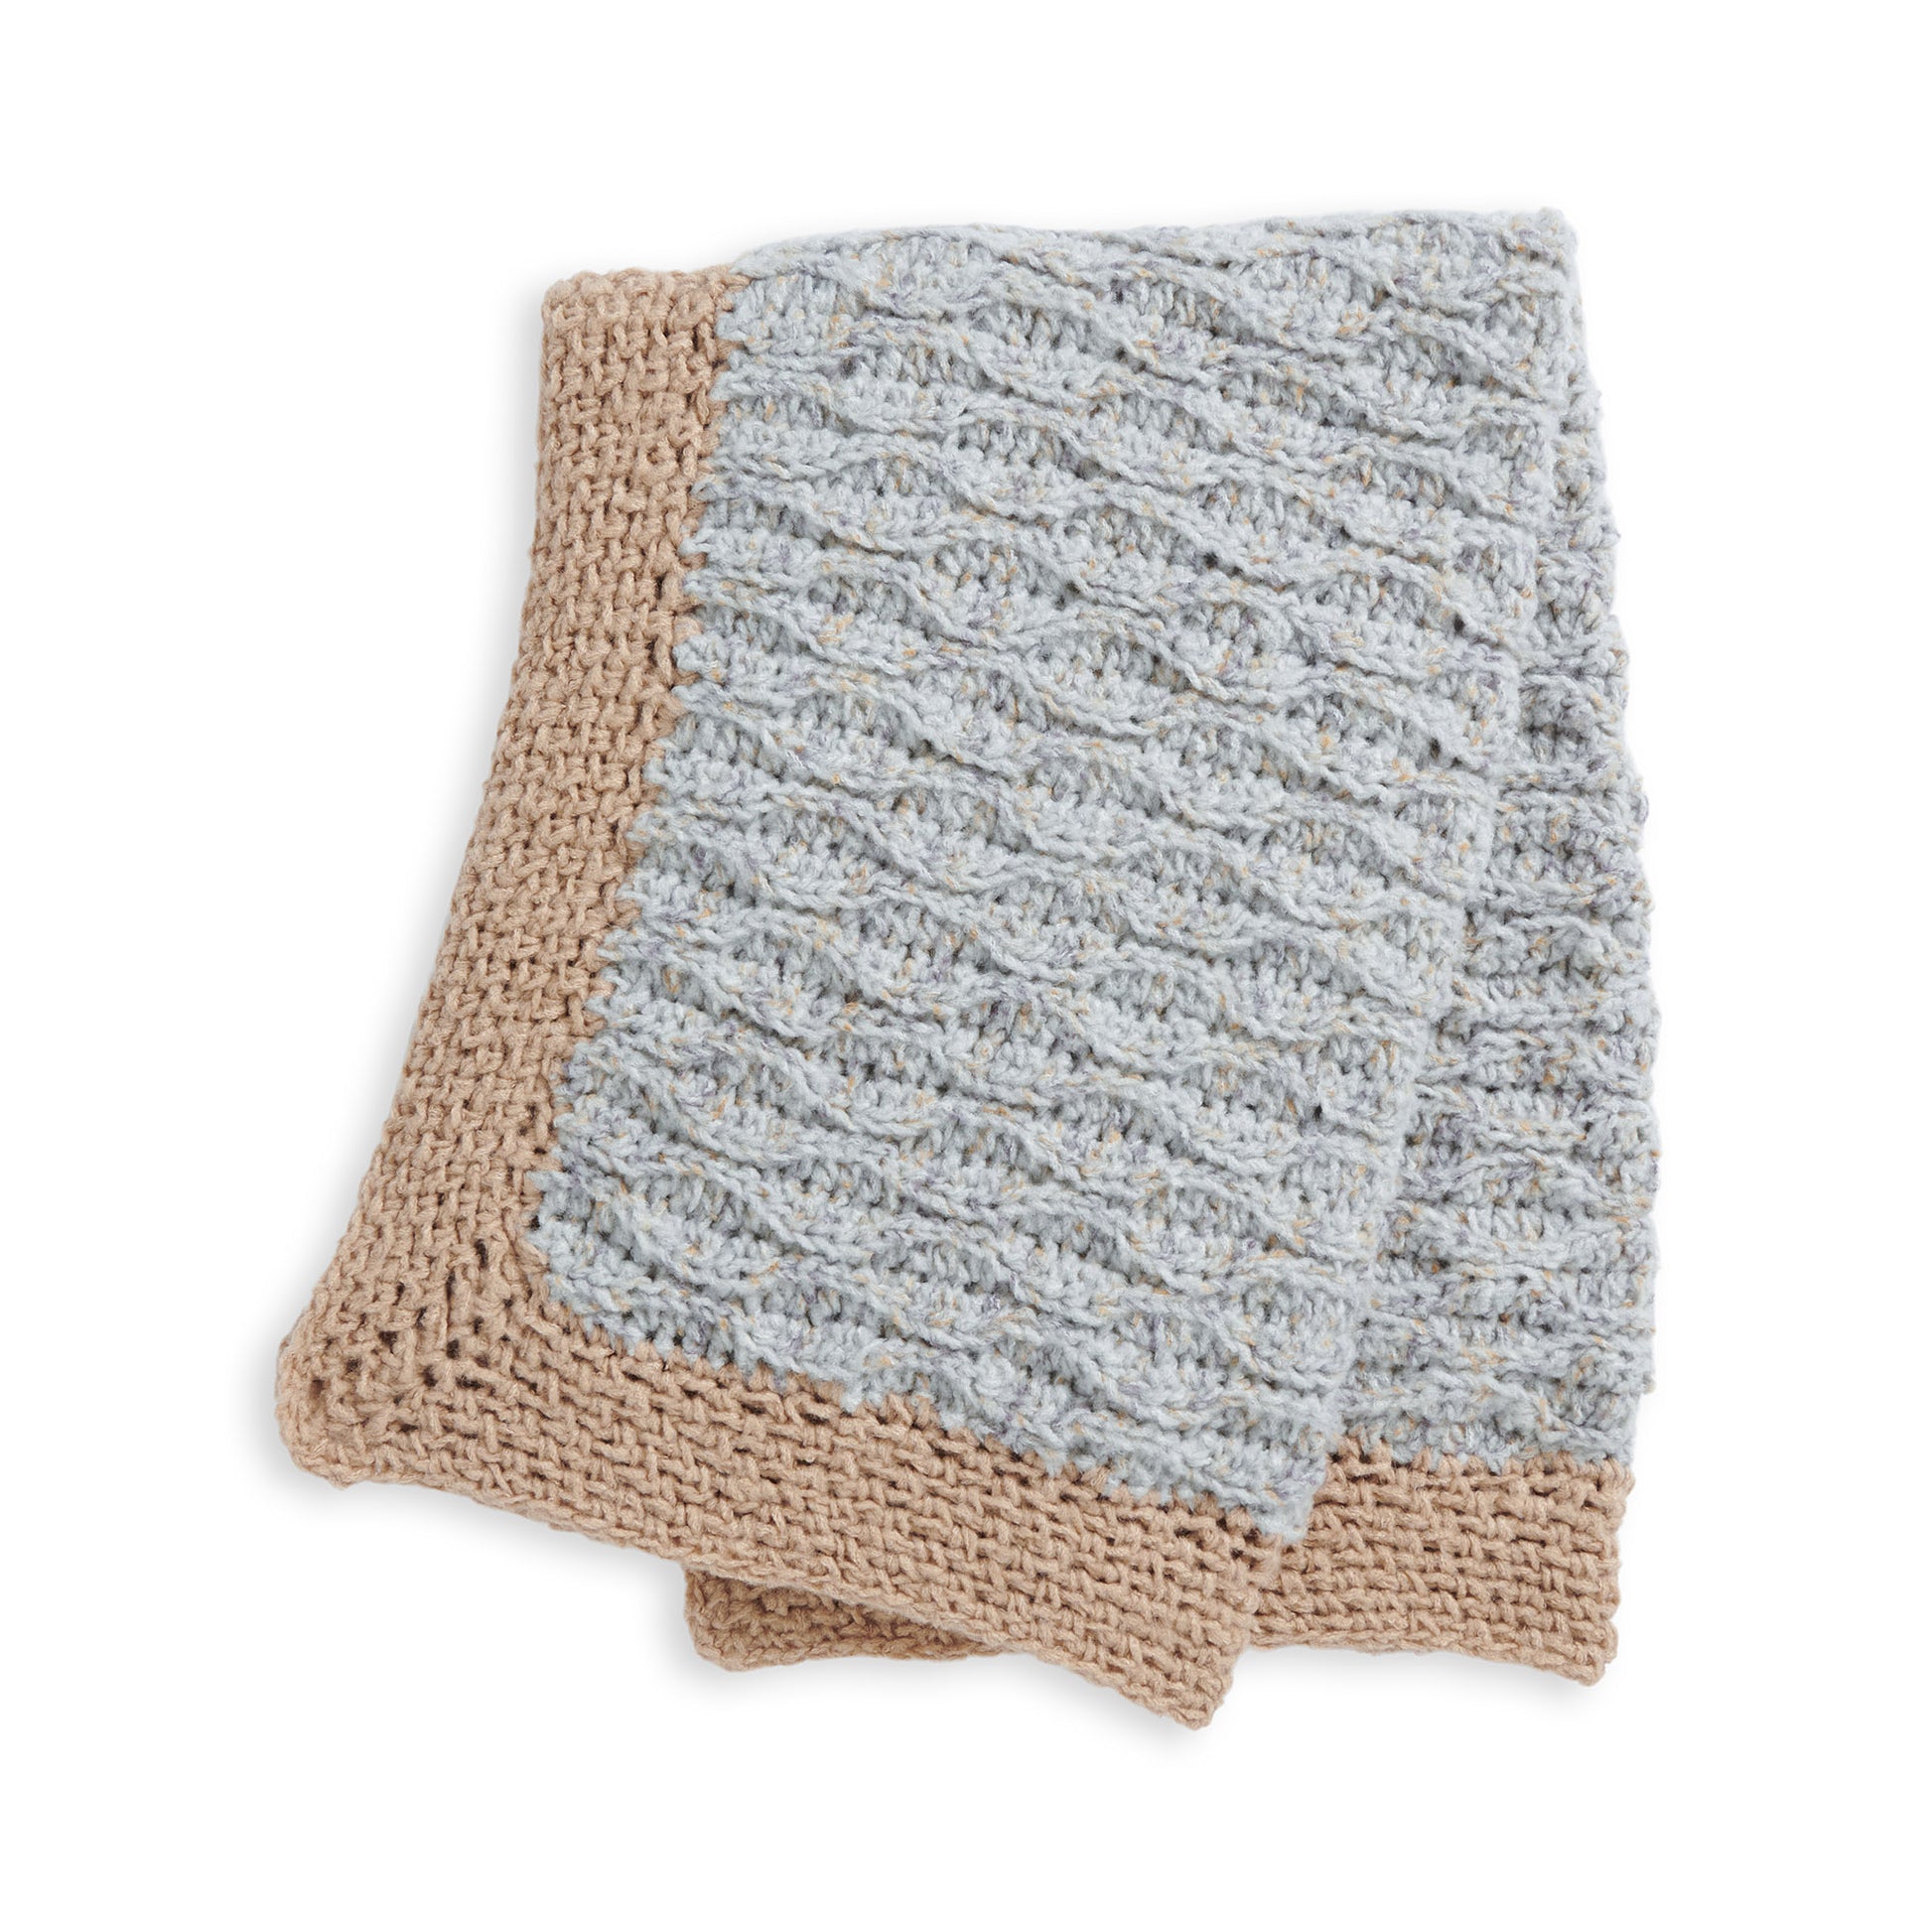 Hook 2.25 mm (B-1) Crochet Patterns - Easy Crochet Patterns